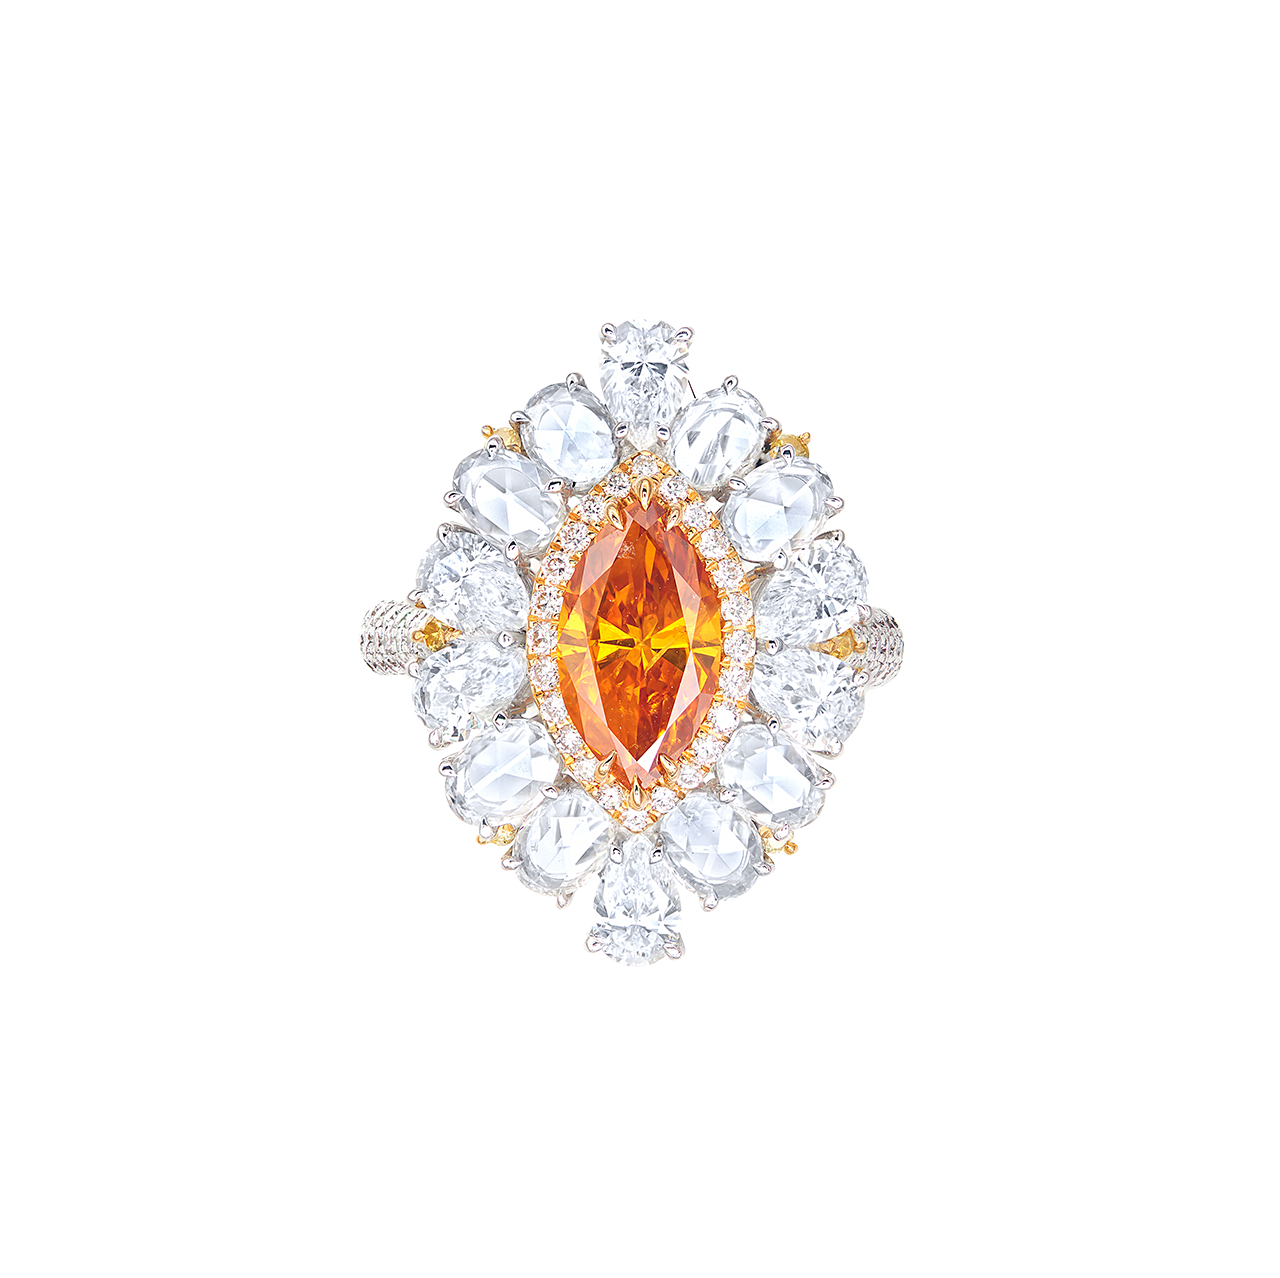 GIA 1.38CT橘鑽戒
FANCY DEEP ORANGE COLOURED DIAMOND AND DIAMOND RING